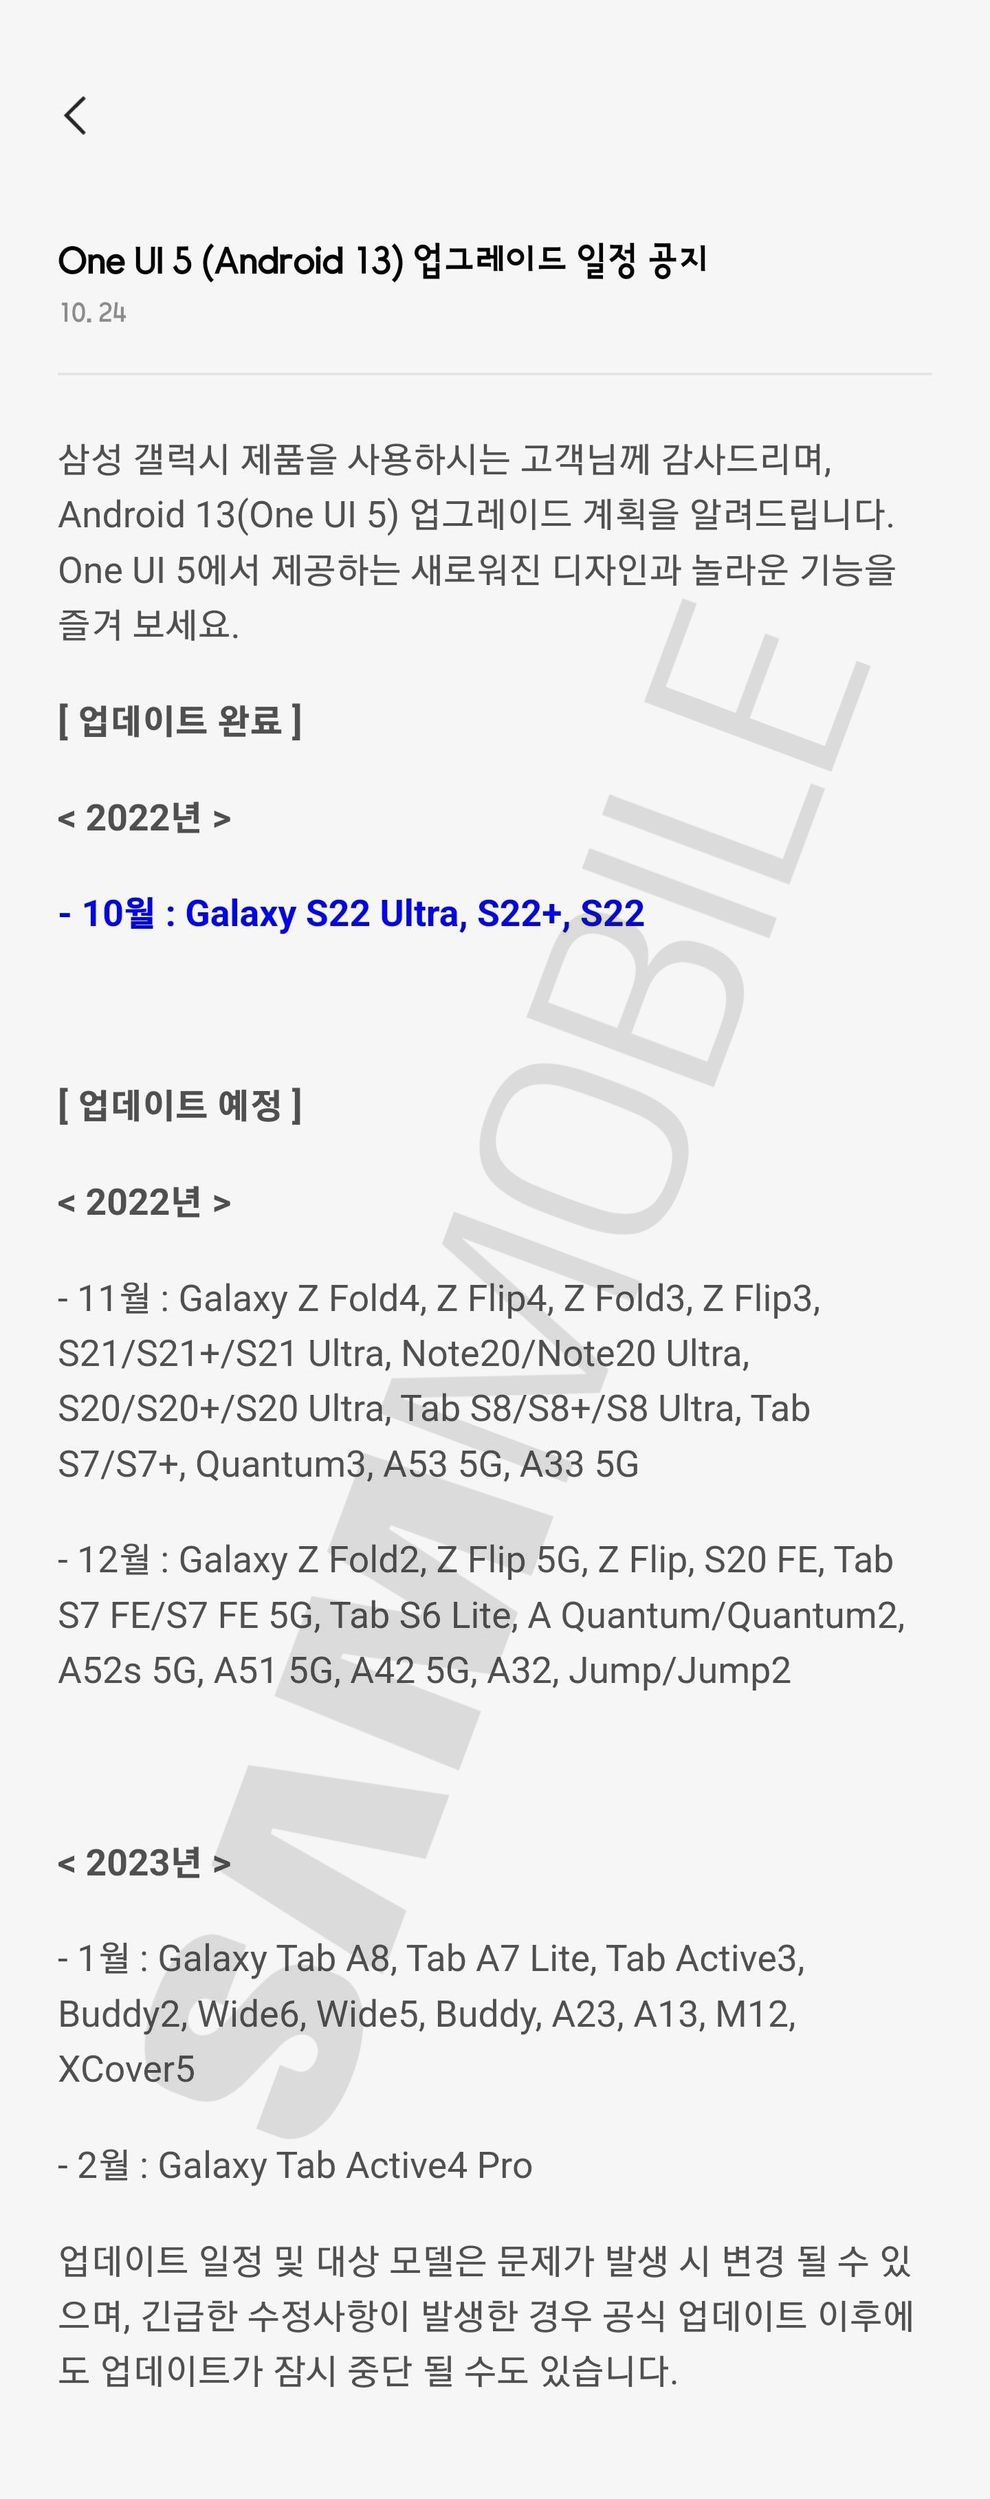 Samsung-One-UI-5.0-Update-Release-Schedule